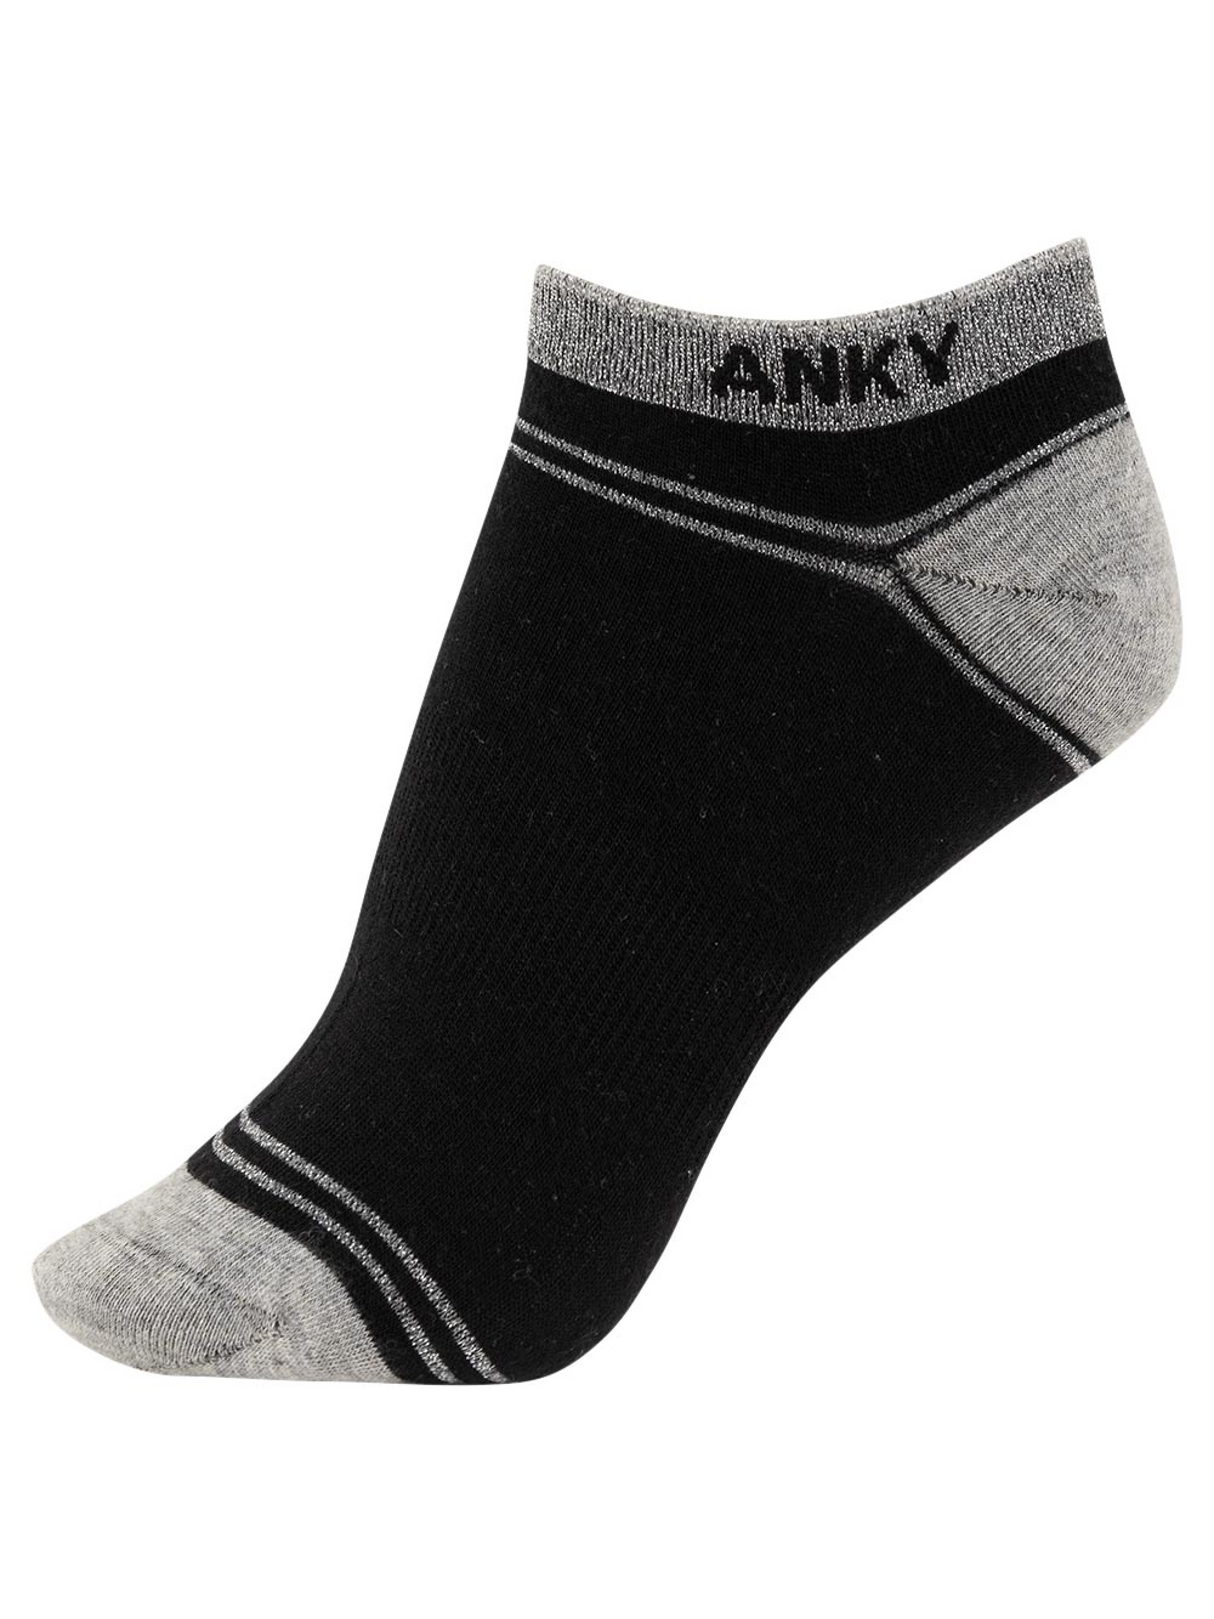 ANKY SS23 Sneaker Socks Black